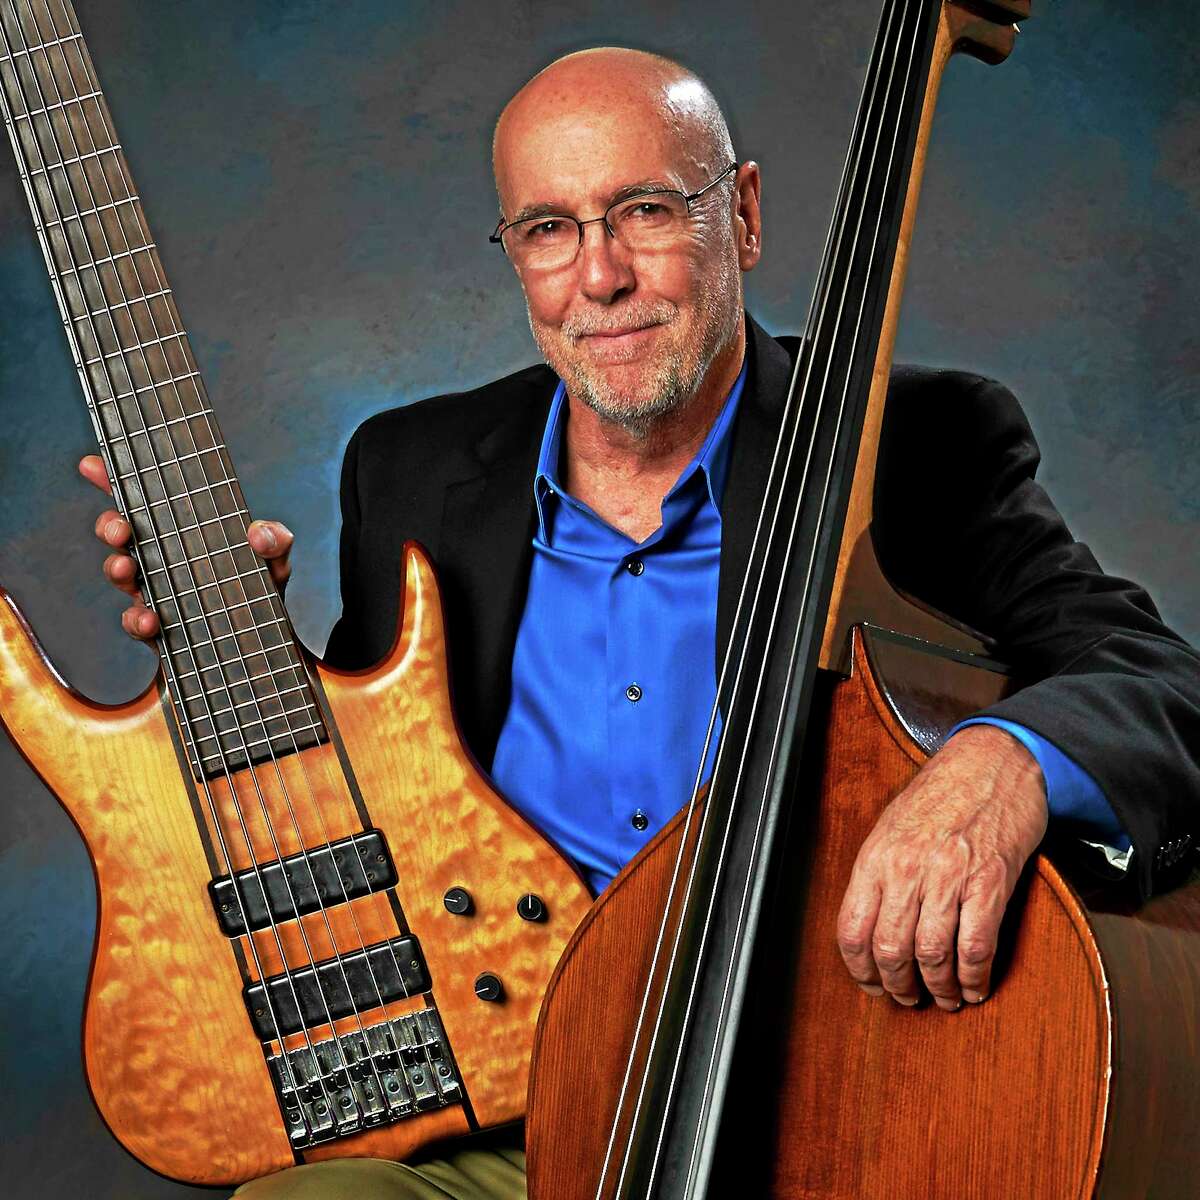 Composer/bassist Jeff Fuller directs the Neighborhood Music School’s Premier Jazz Ensemble.